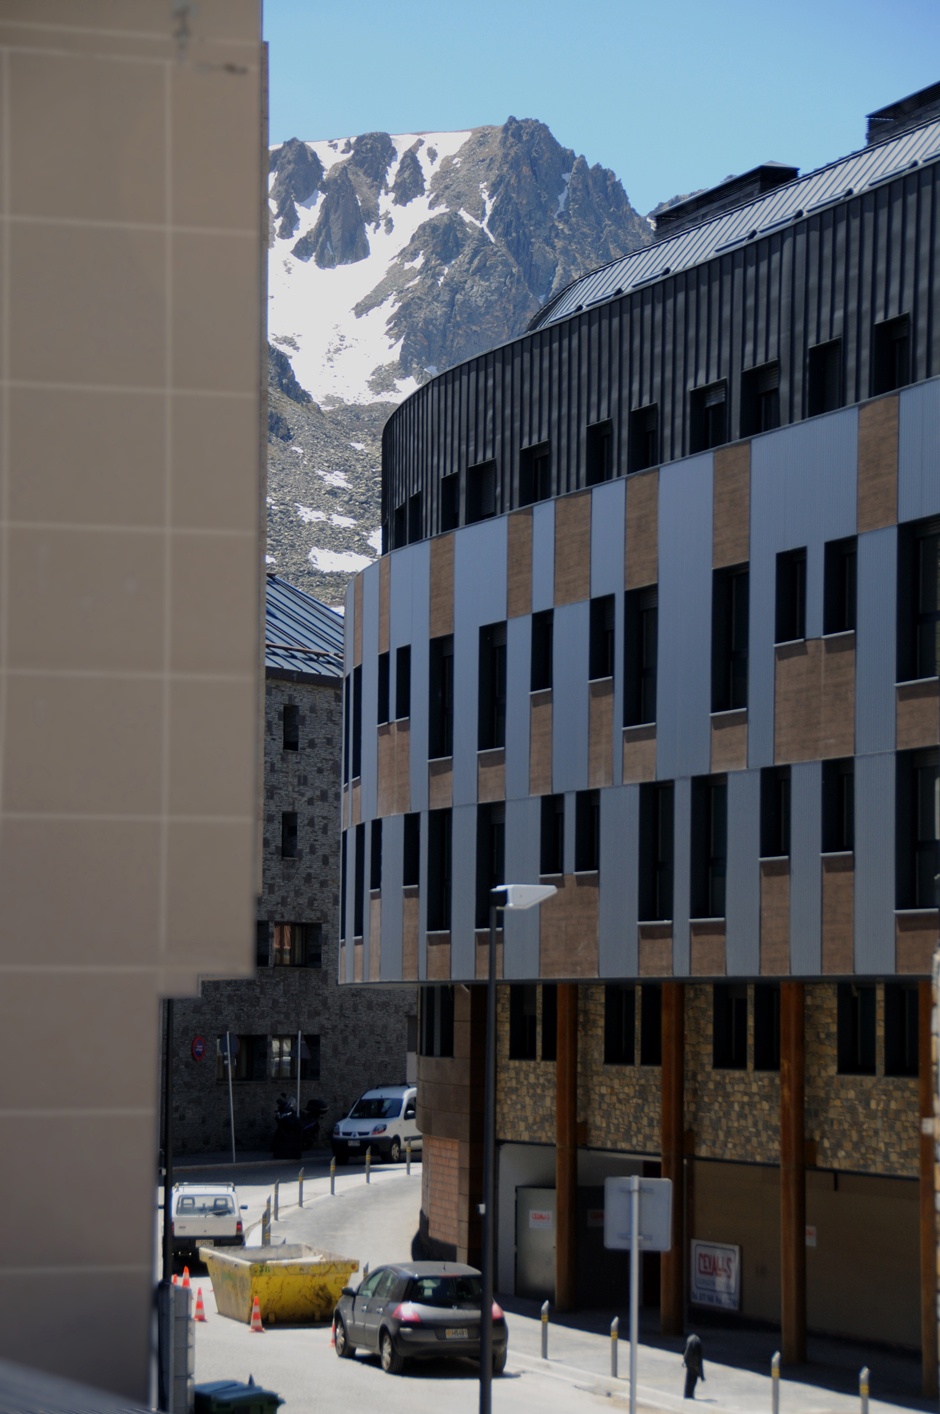 Competition for social housing La Solana, Urb Sant Pere to Pas de la Casa (First Prize), Architecture (Principality of Andorra)